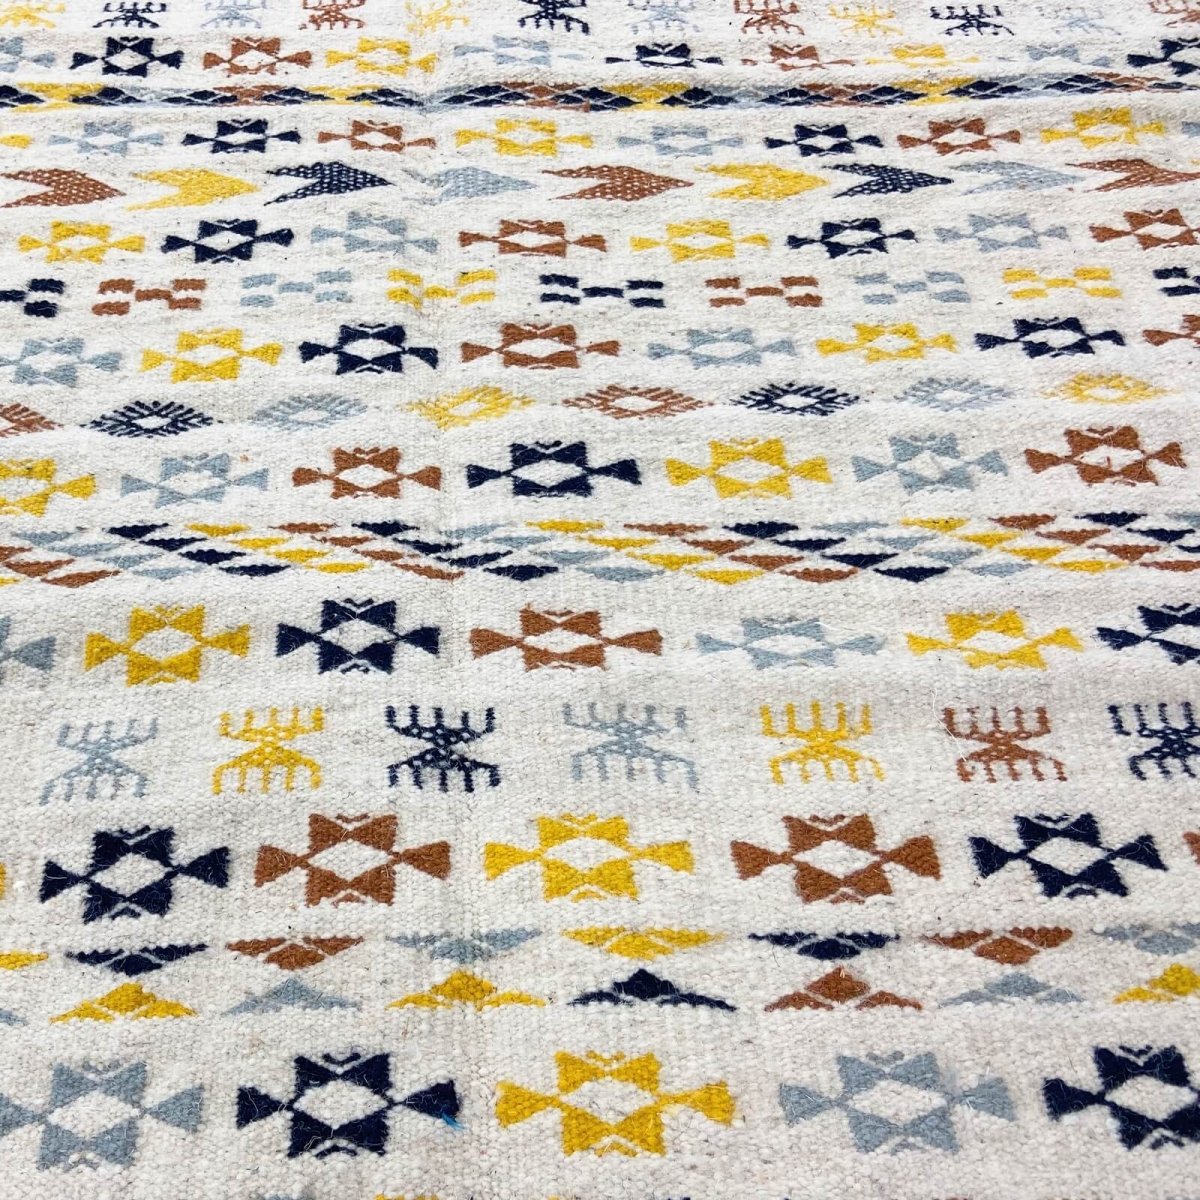 Tapete berbere Tapete Kilim 125x190 cm Branco Amarelo Azul Marrom | Tecidos à mão, Lã, Tunísia Tapete tunisiano kilim, estilo ma